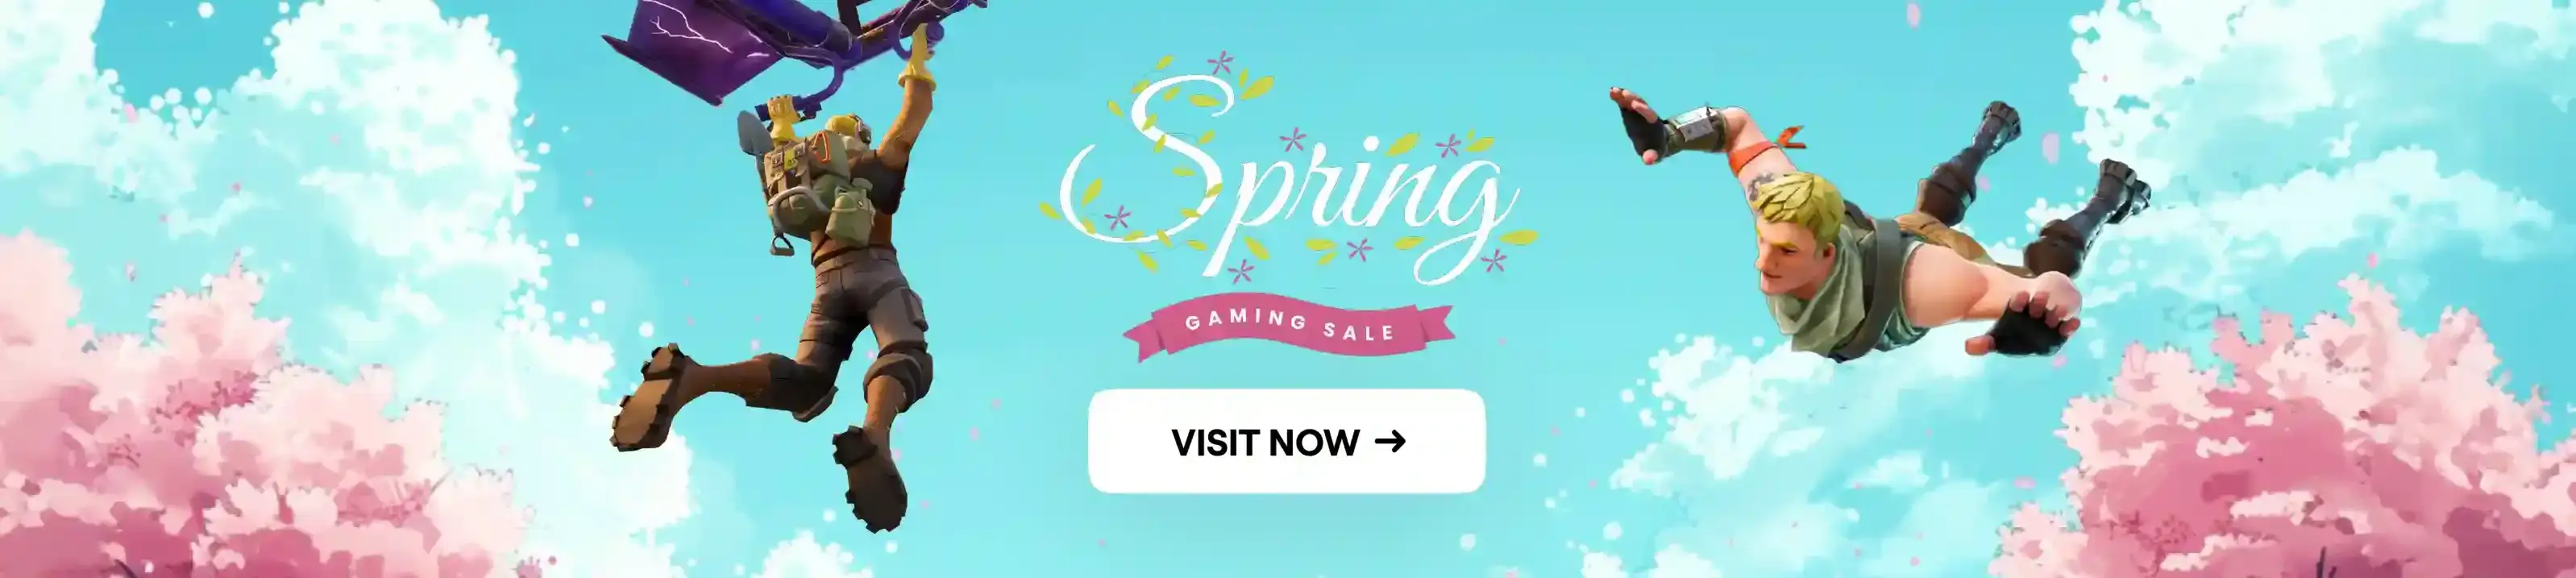 Spring Sale Mobile